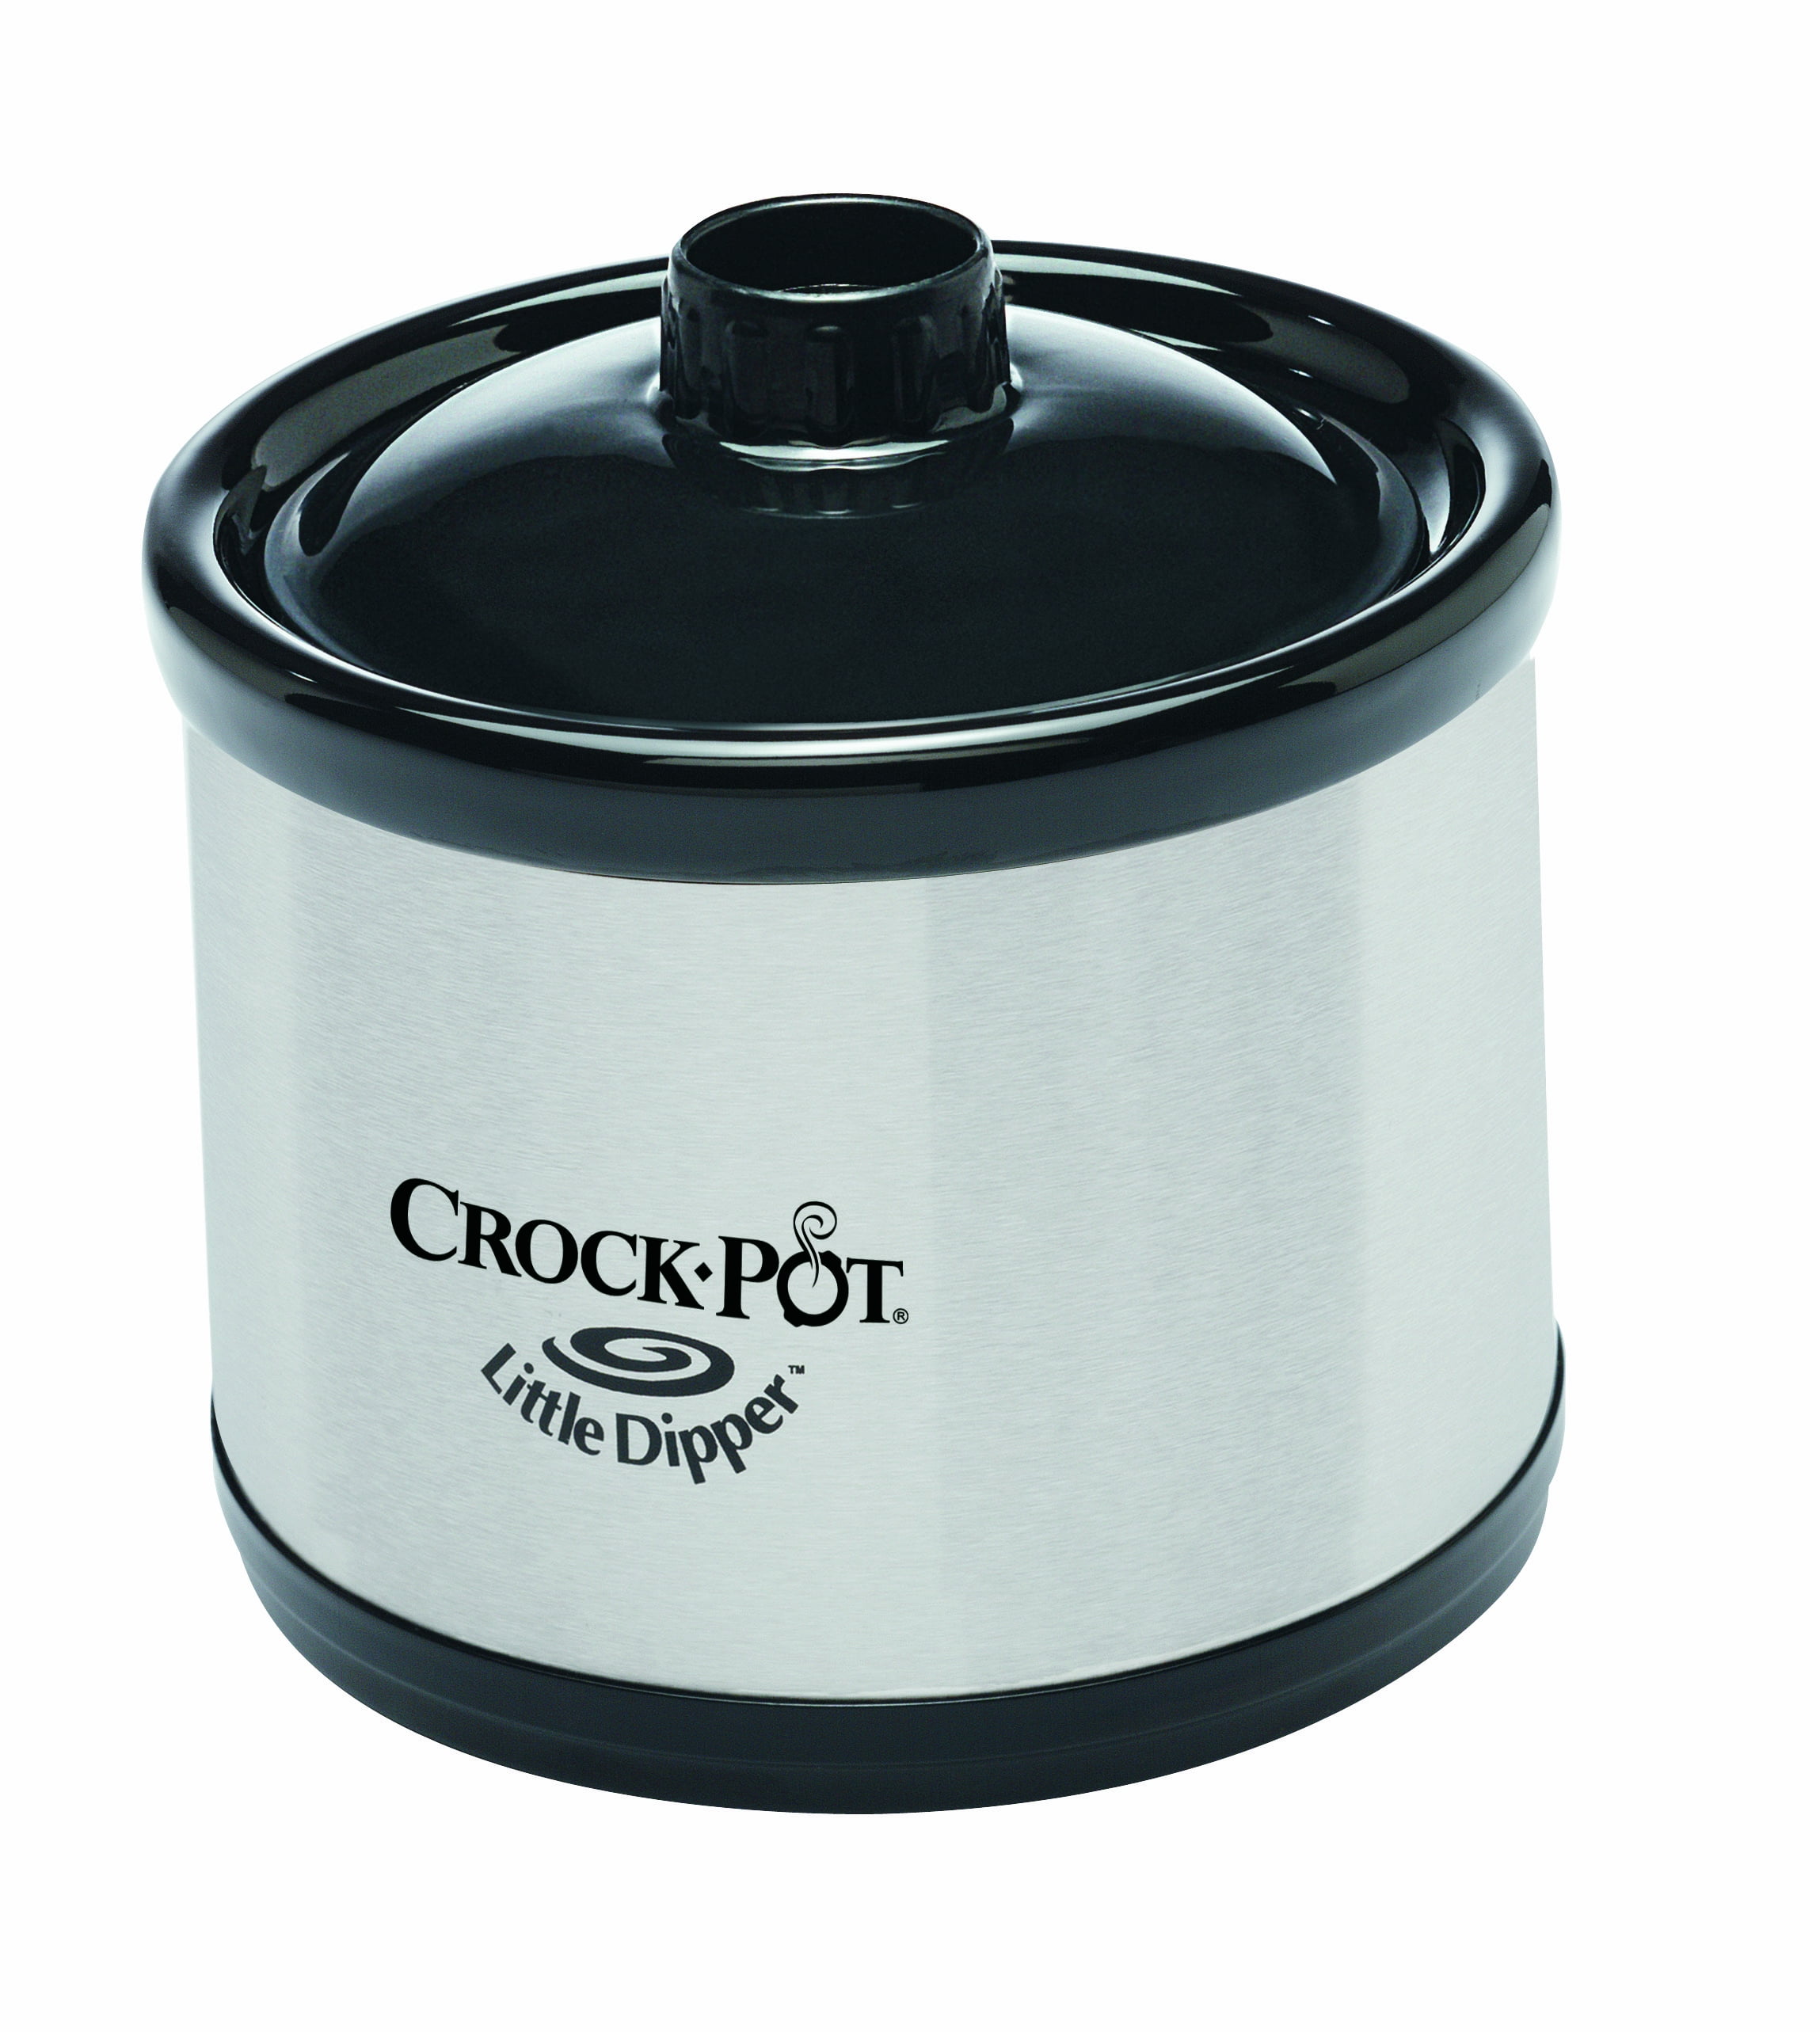 Crock-Pot Little Dipper Mini Slow Cooker Stainless Black 32041 Dip Pot 1 Qt.